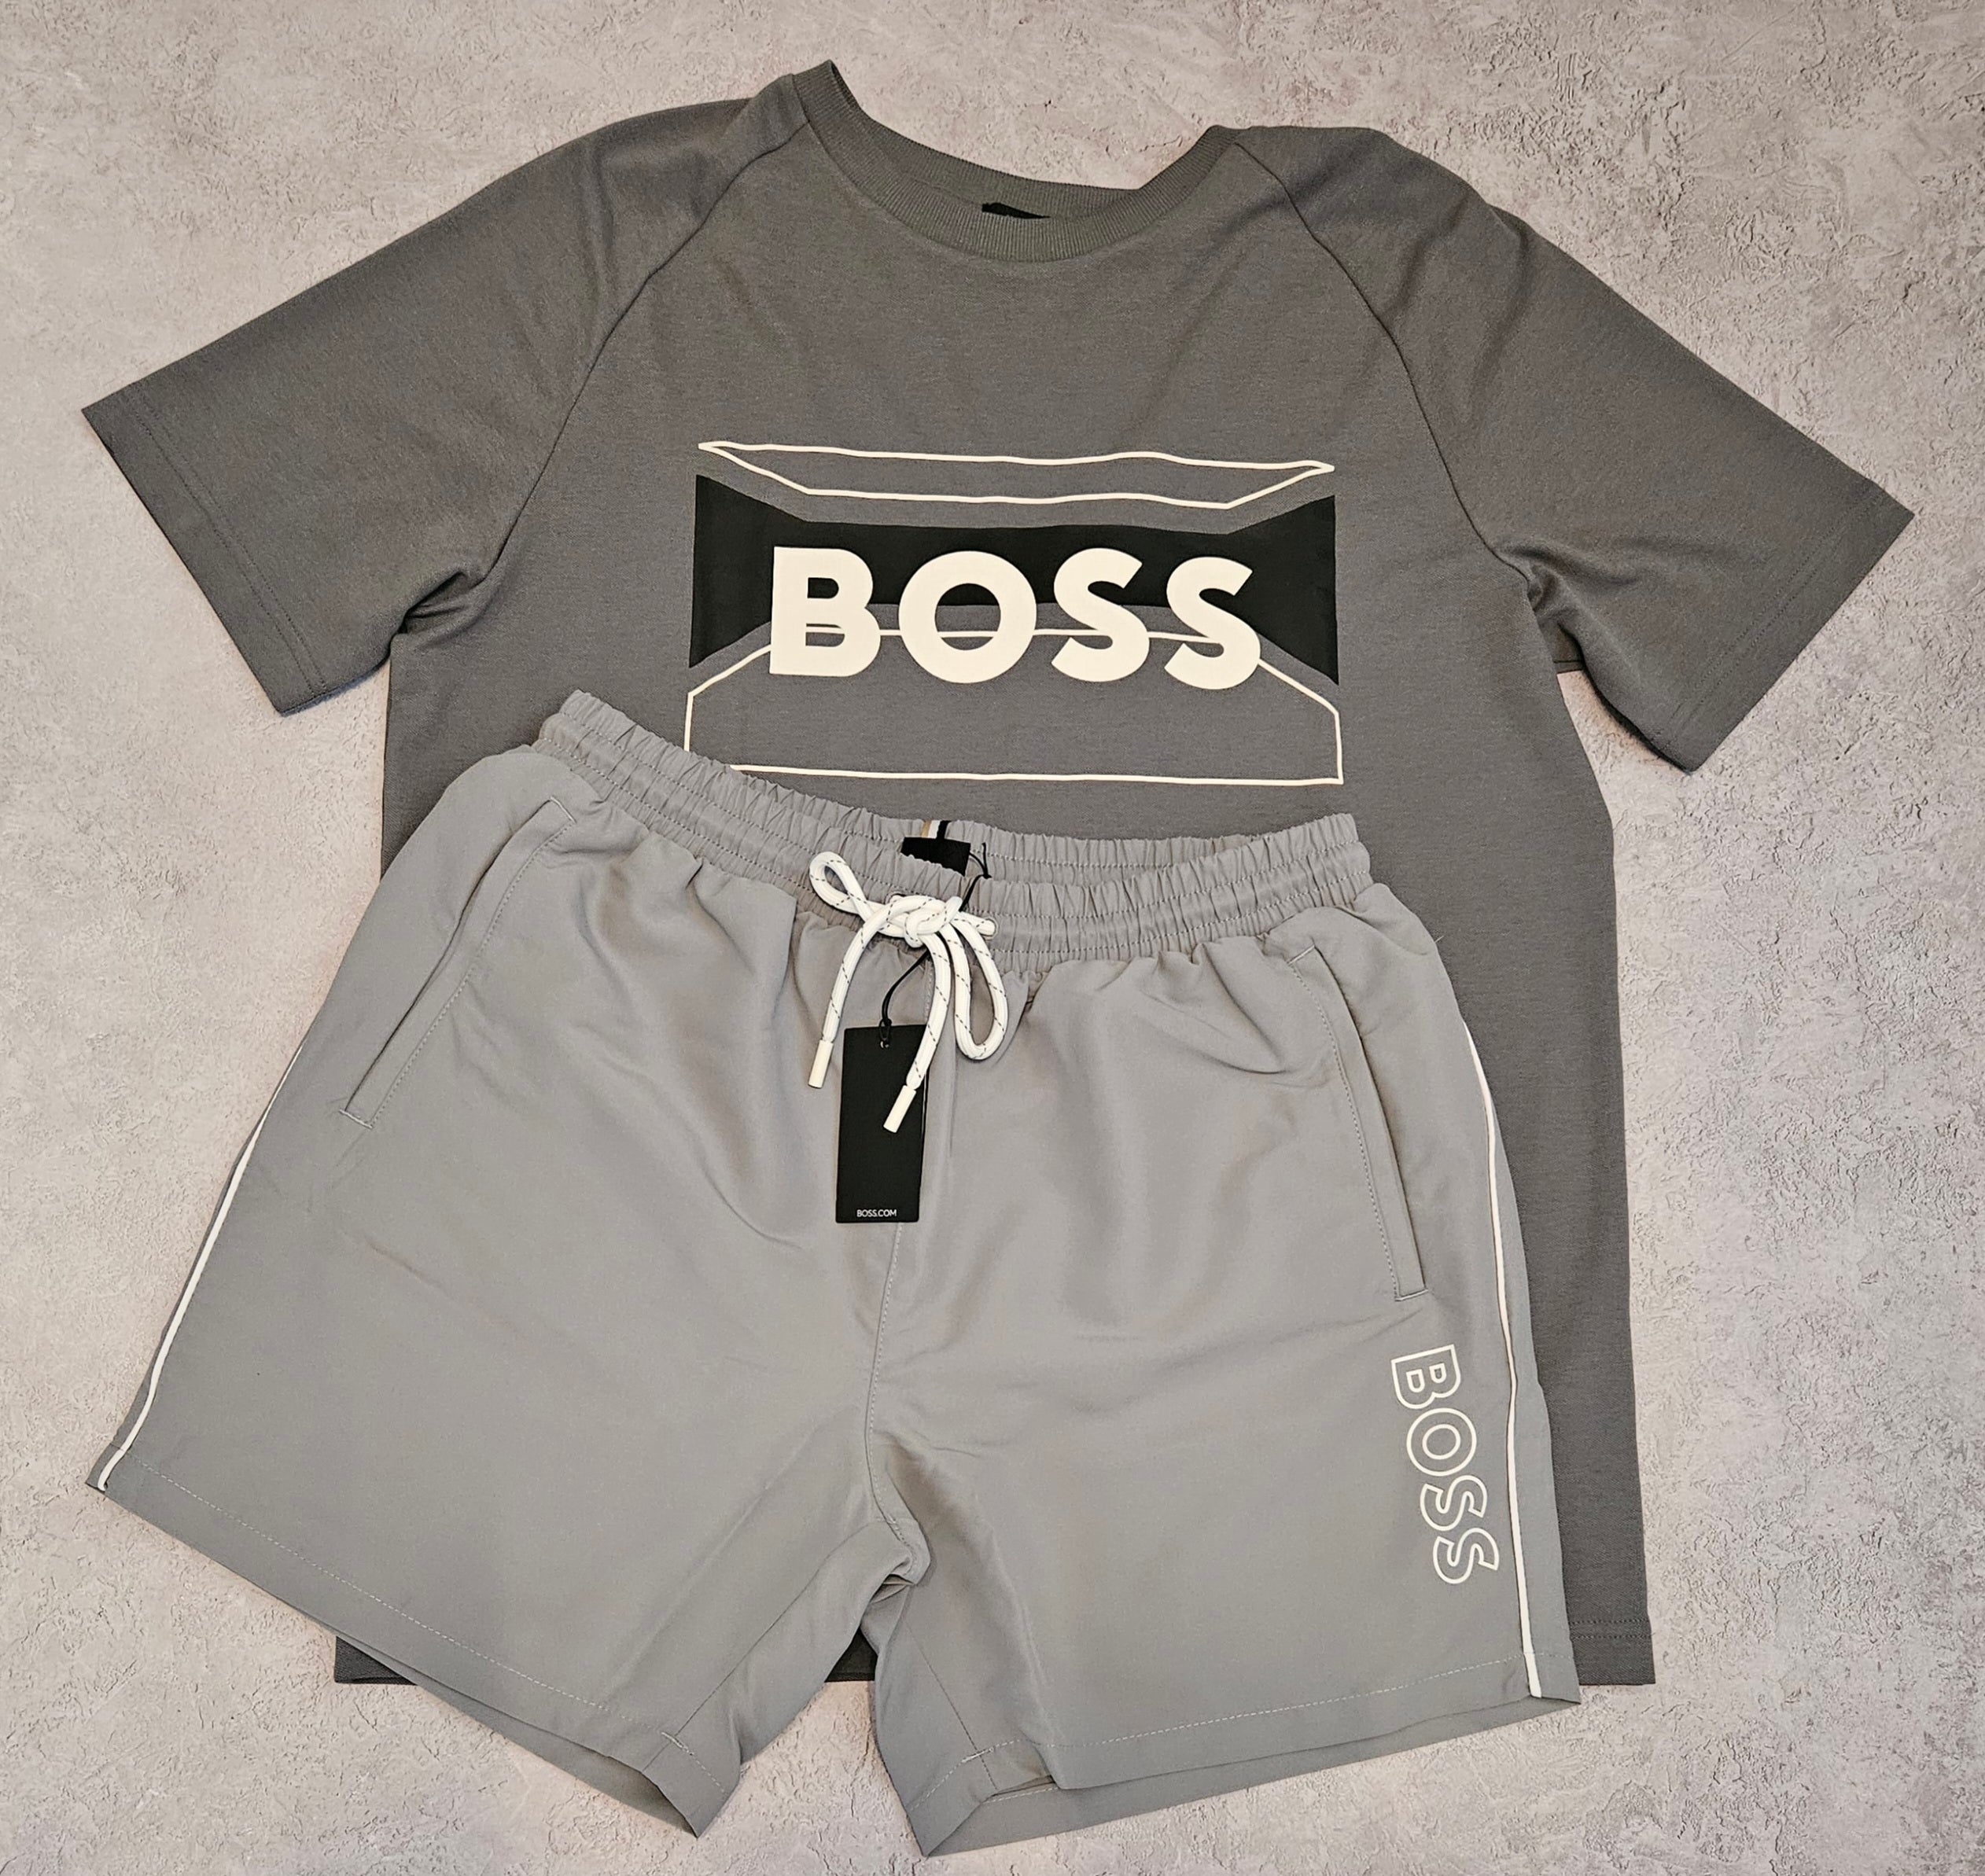 Hugo Boss Logo Shorts Set Grey